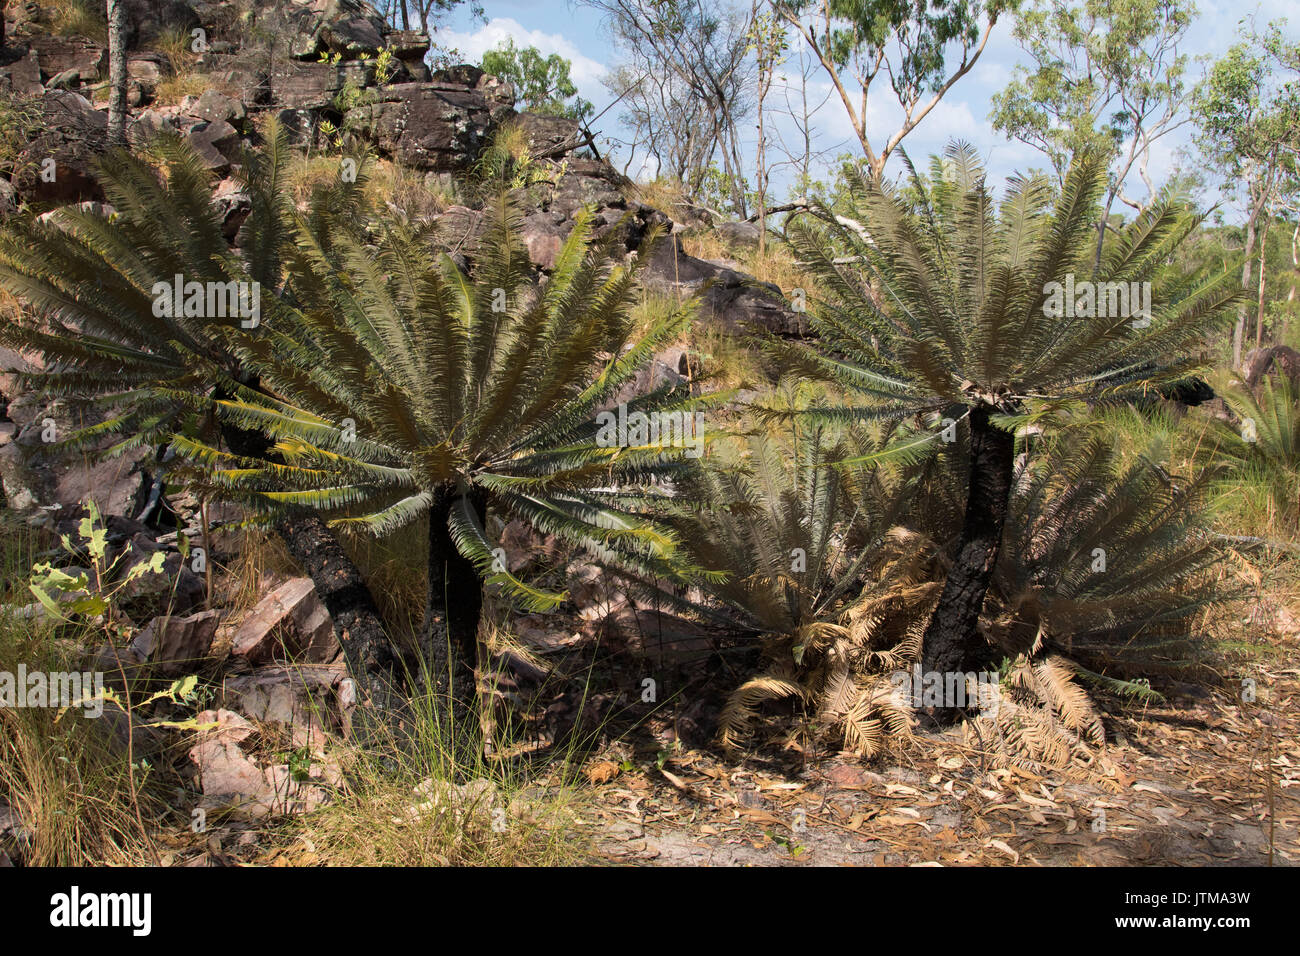 Cycad trees (Cycas calcicola) in rocky, arid area of northern Australia Stock Photo